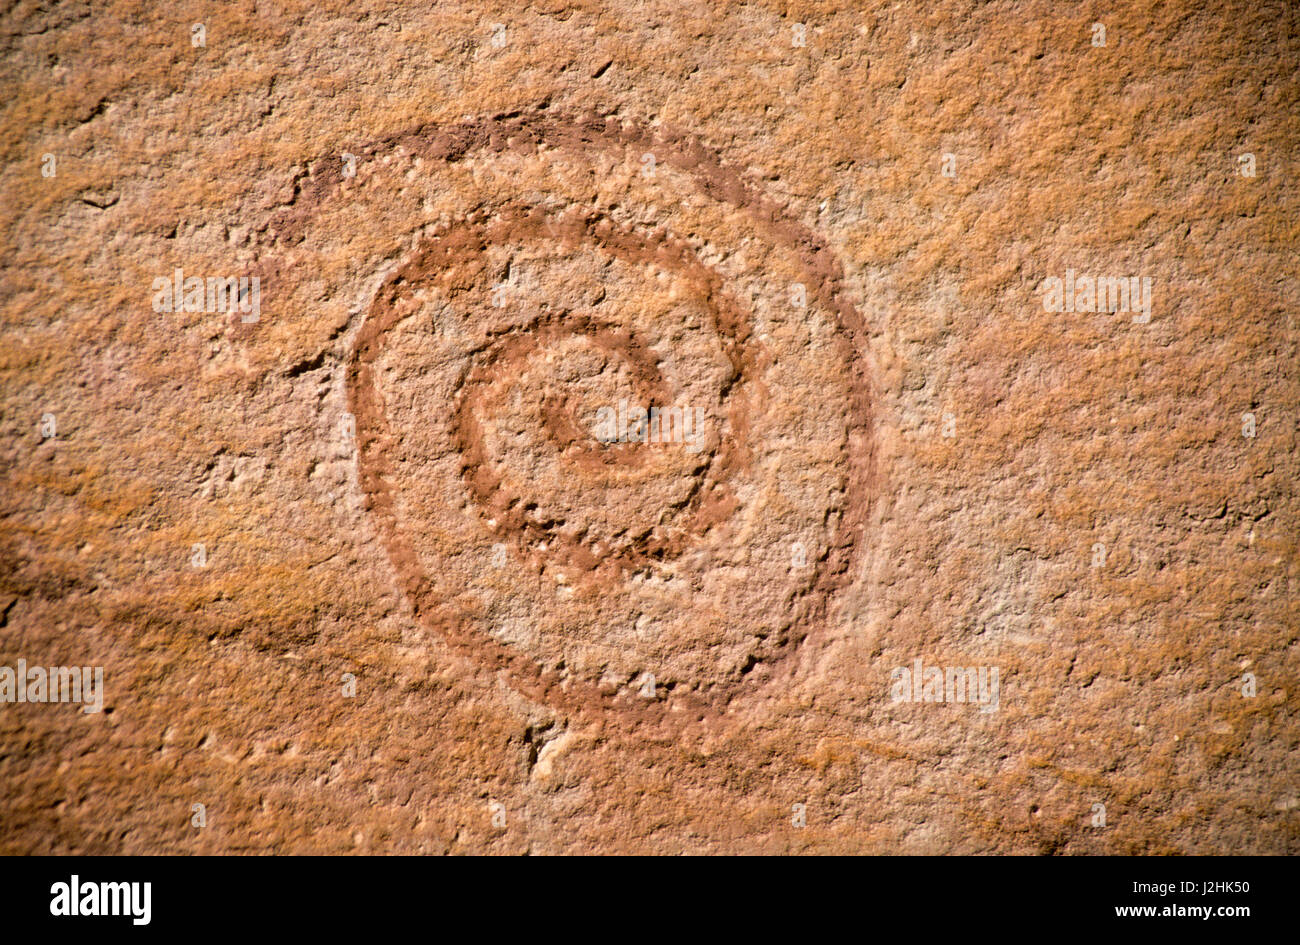 Ute petroglyph rock art with spiral symbol of woman, everlasting or eternity, Vernal Utah Stock Photo